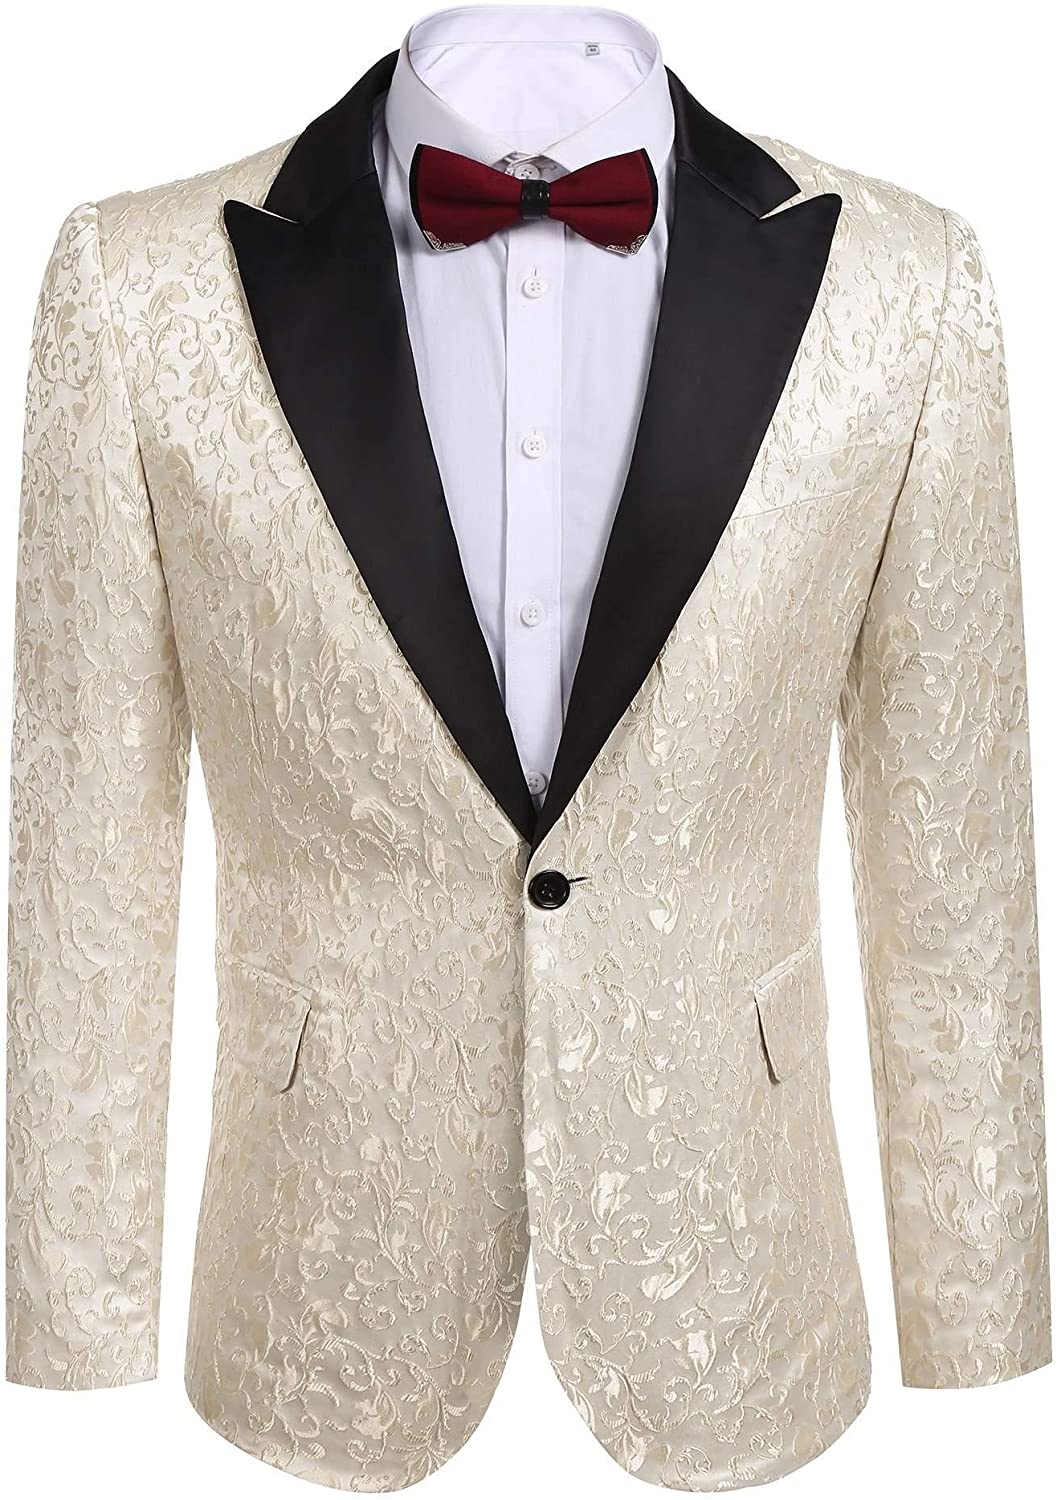 COOFANDY Men's Floral Tuxedo Suit Jacket Slim Fit Dinner Jacket Party Prom Wedding Blazer Jackets 